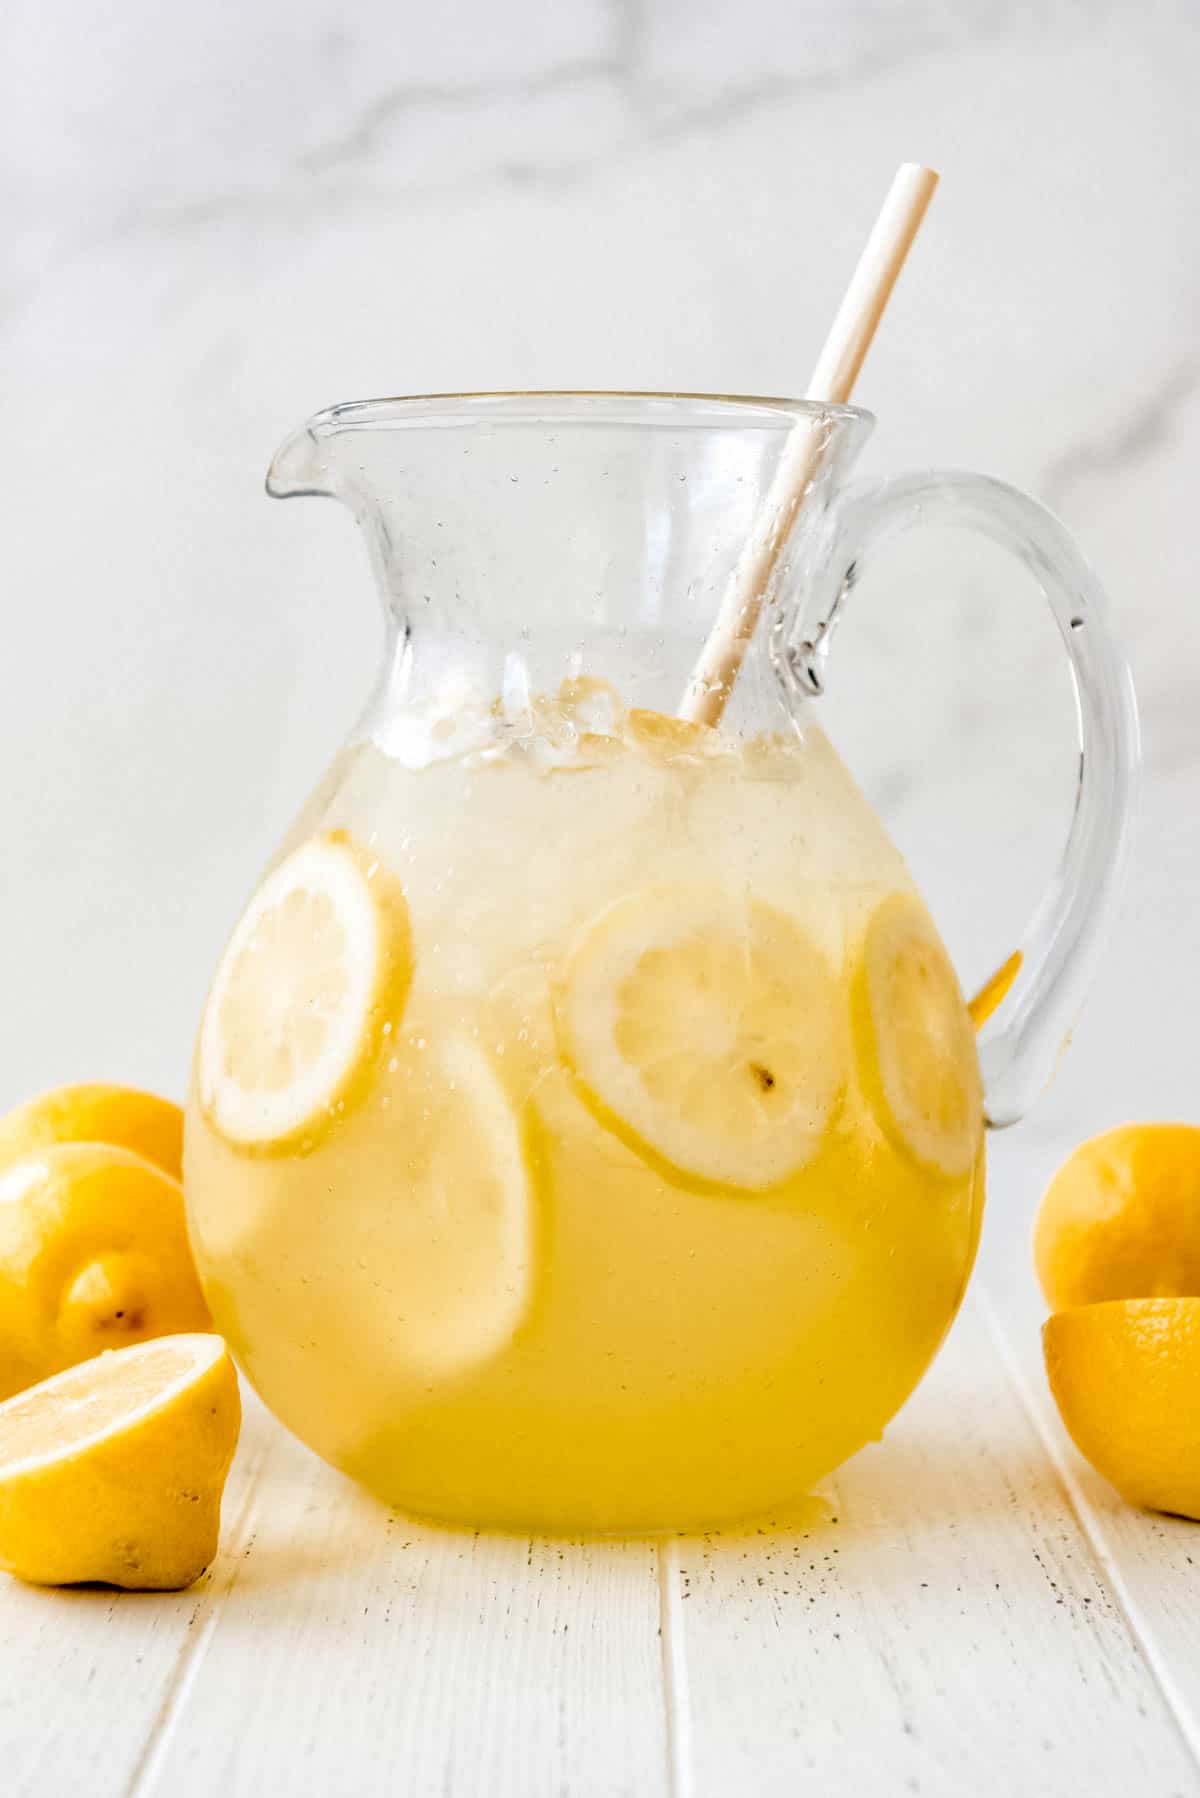 https://houseofnasheats.com/wp-content/uploads/2021/05/Homemade-Lemonade-8.jpg